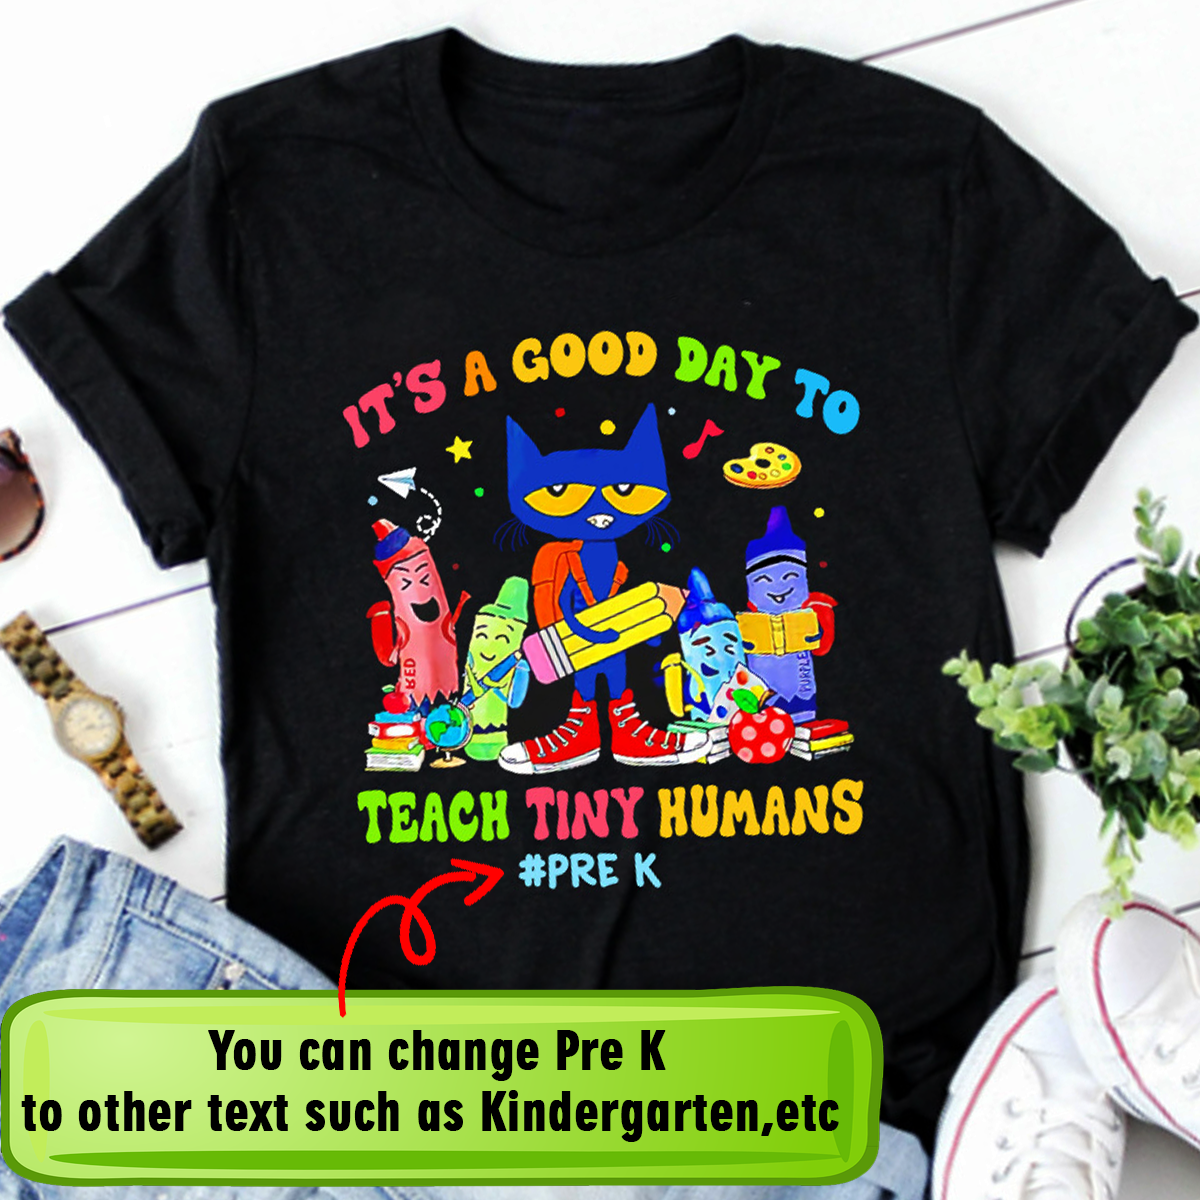 Its A Good Day To Teach Tiny Humans Pete The Cat T-shirt, Back To School Shirt, Crayon Teacher Team Shirt, Blue Cat Shirt,Preschool Teacher